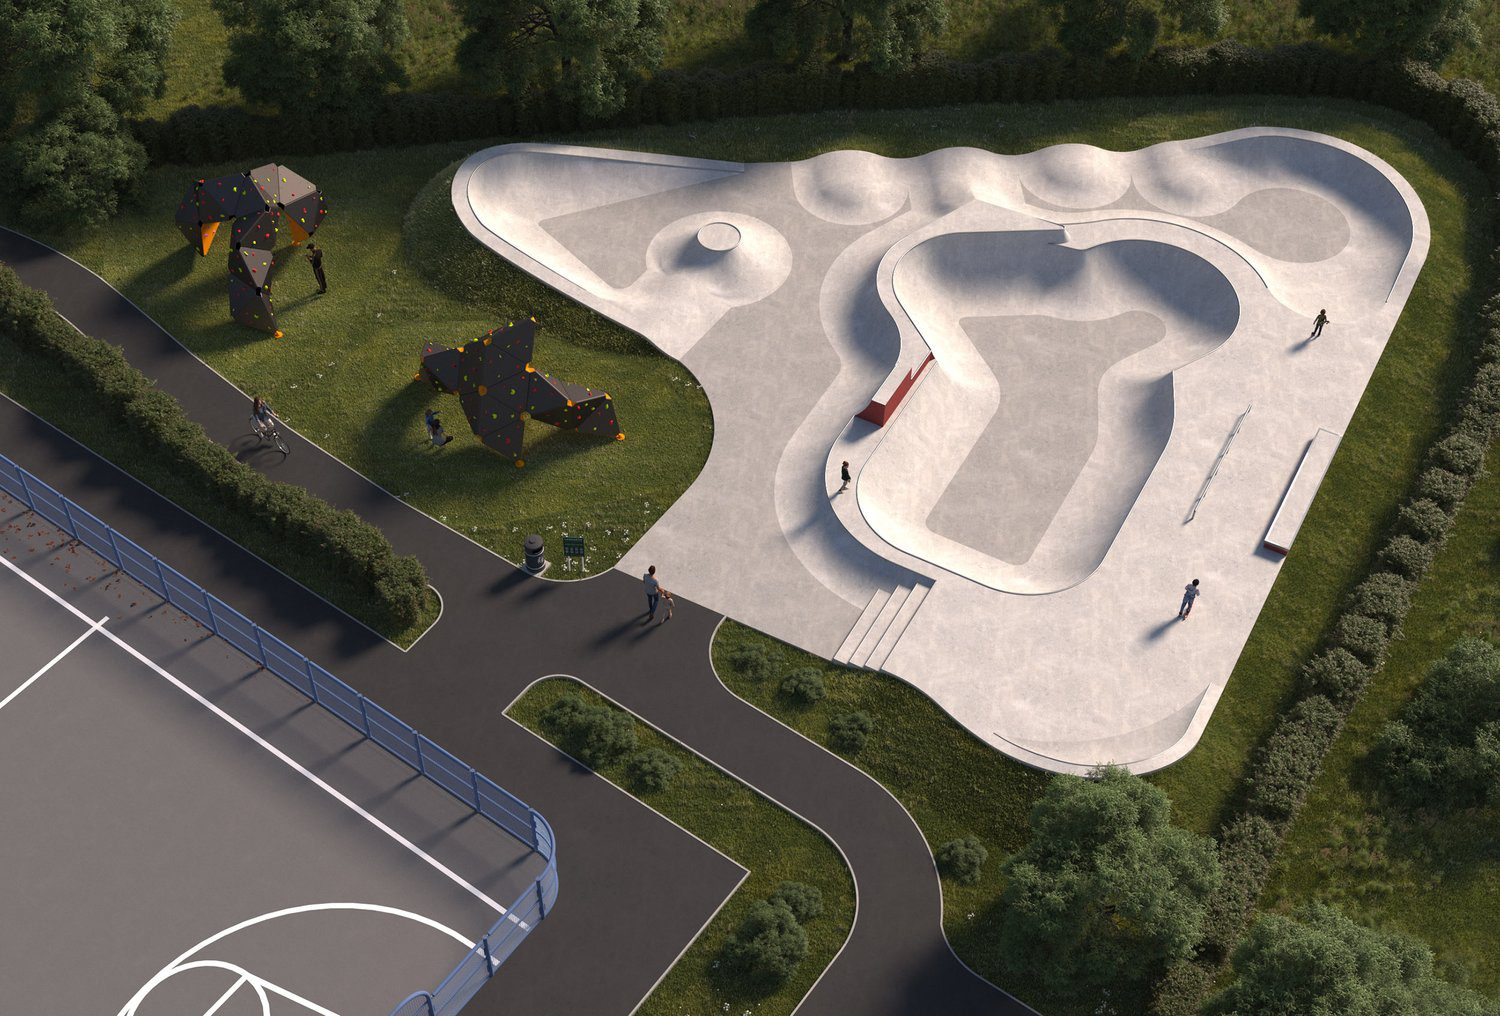 Community invited to help design the new skatepark for Langarth Garden Village